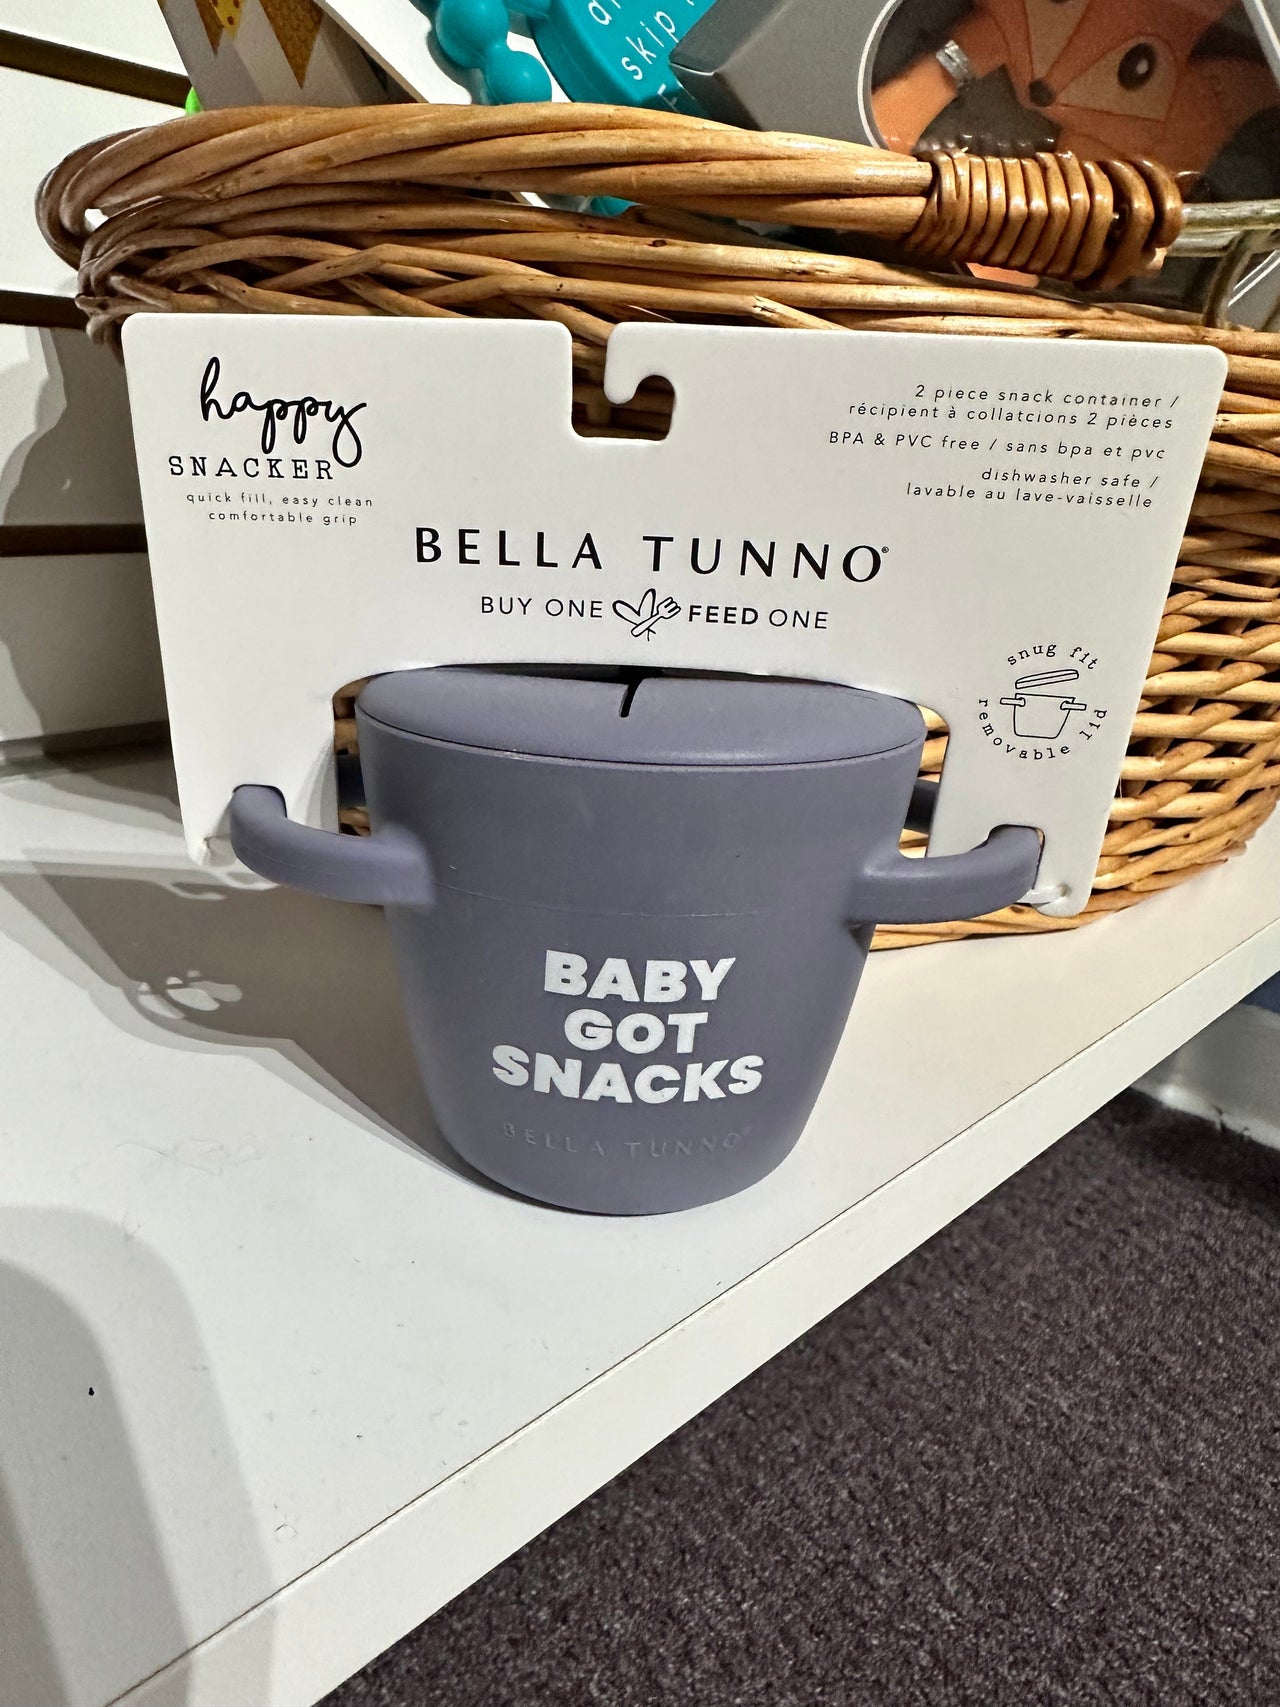 Bella Tunno Snacker Bowl Bella Tunno Baby & Toddler Baby Got Snacks